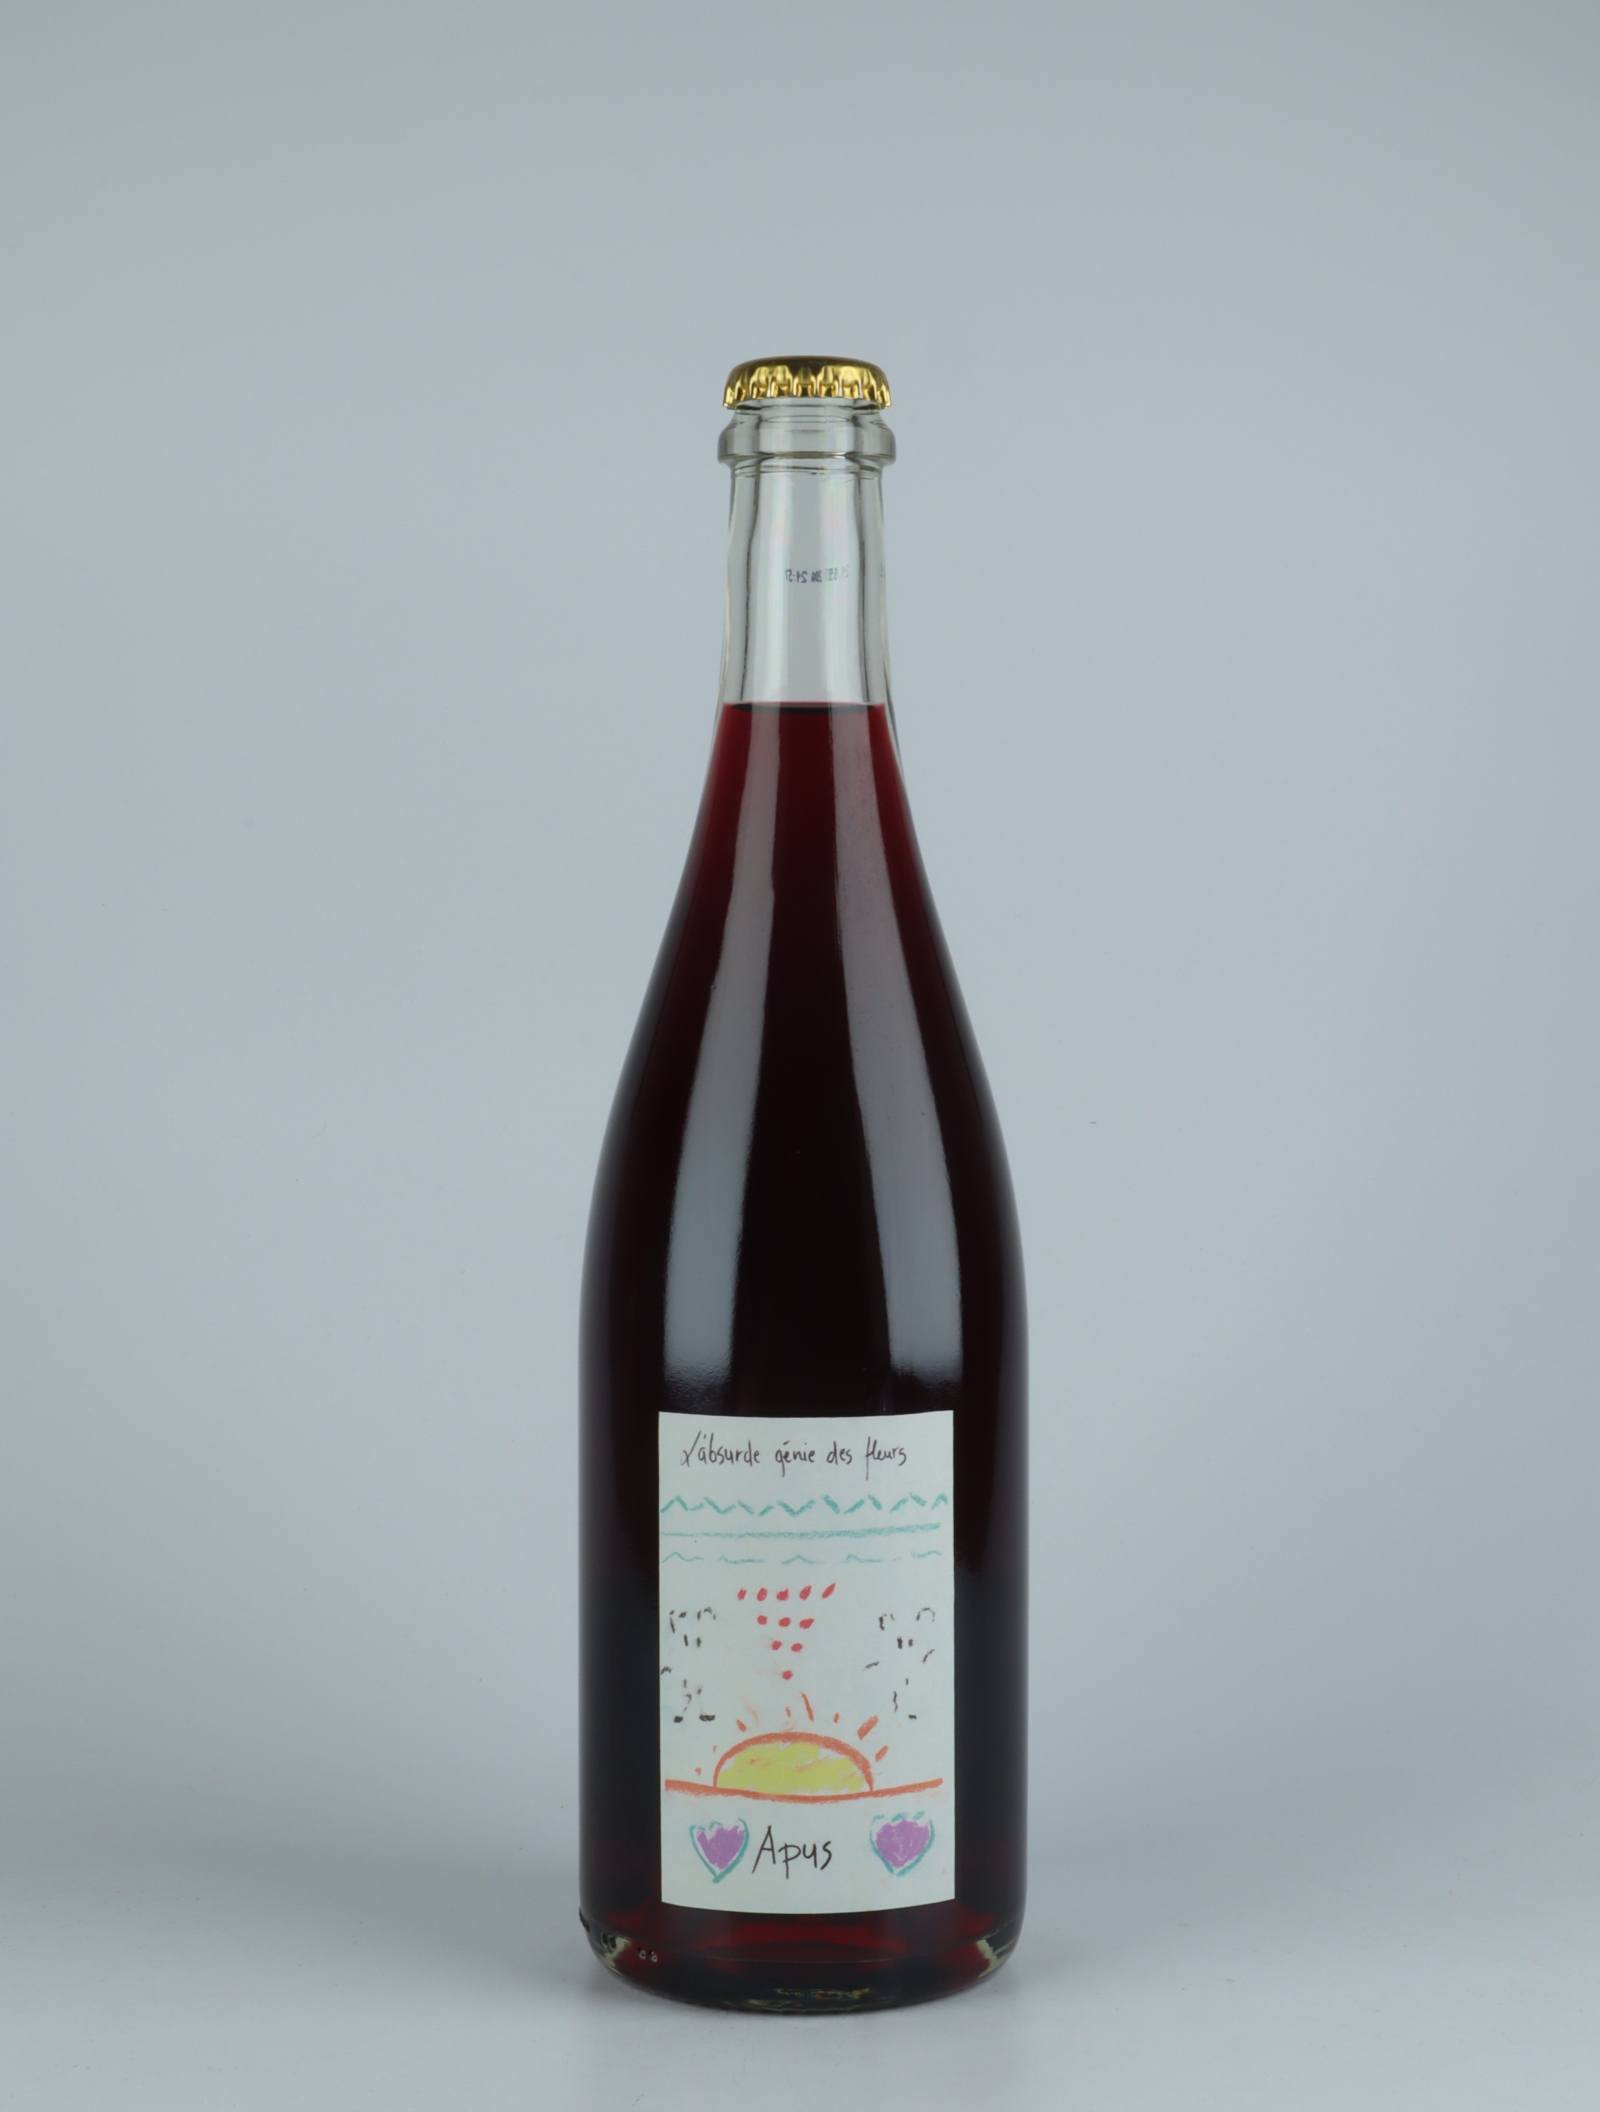 A bottle 2020 Apus Red wine from Absurde Génie des Fleurs, Languedoc in France